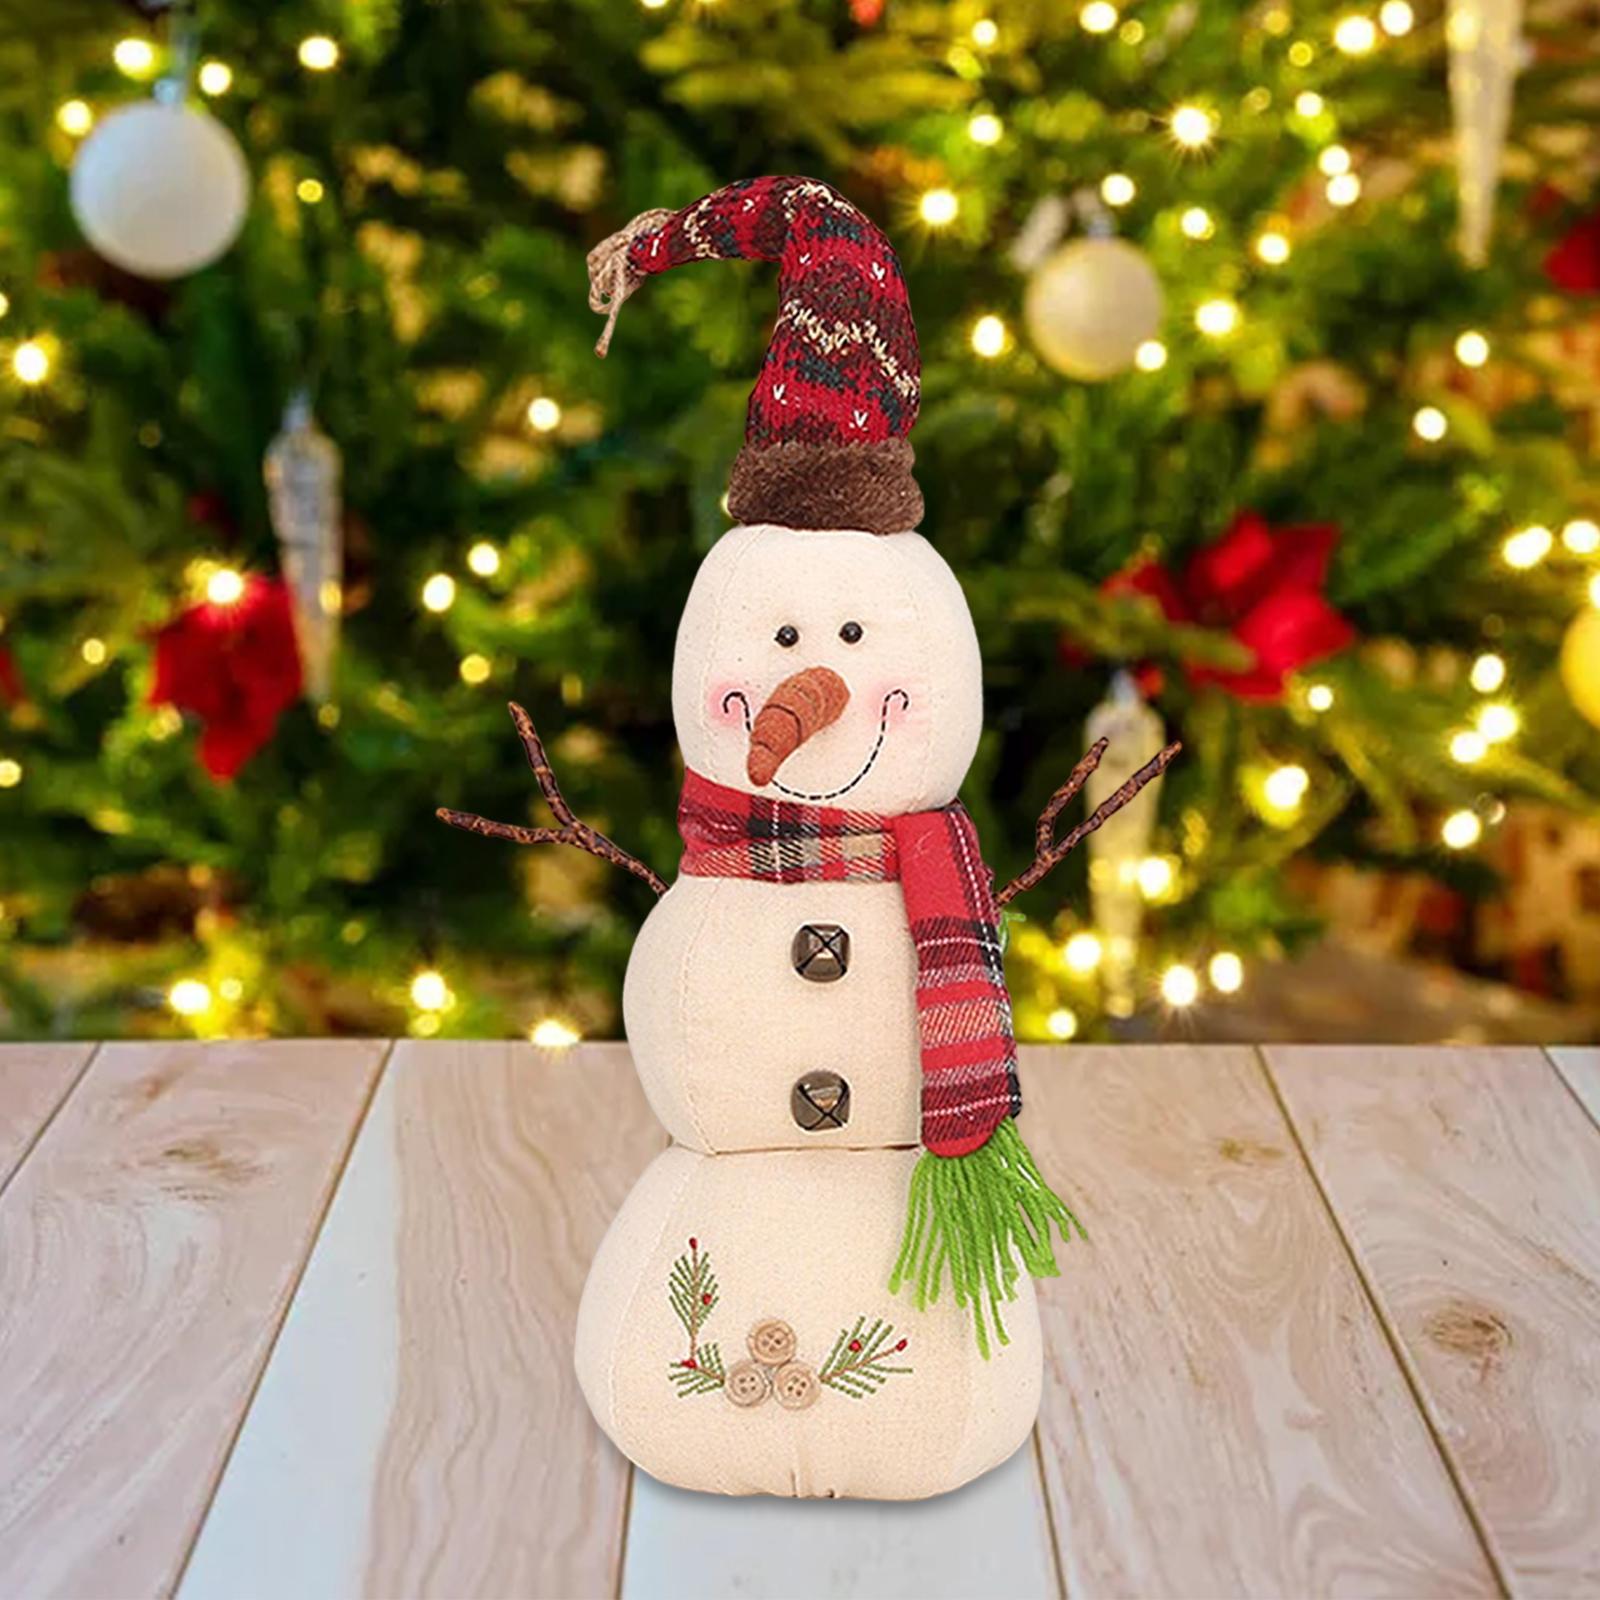 Christmas White Snowman Doll Figurines Plush for Fireplace Atmosphere Decor 15cmx13cmx35cm